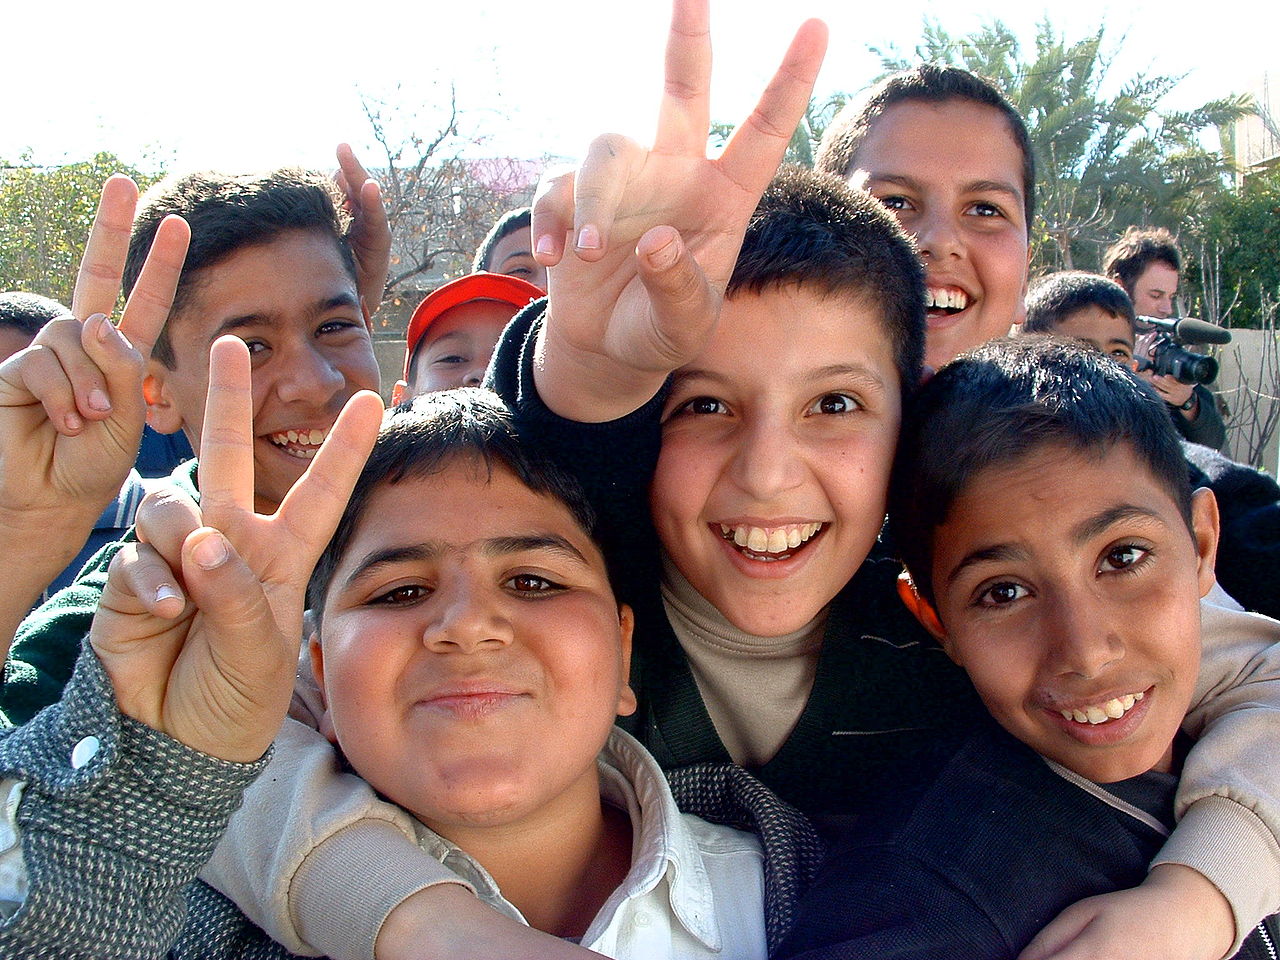 Iraqi boys in 2003